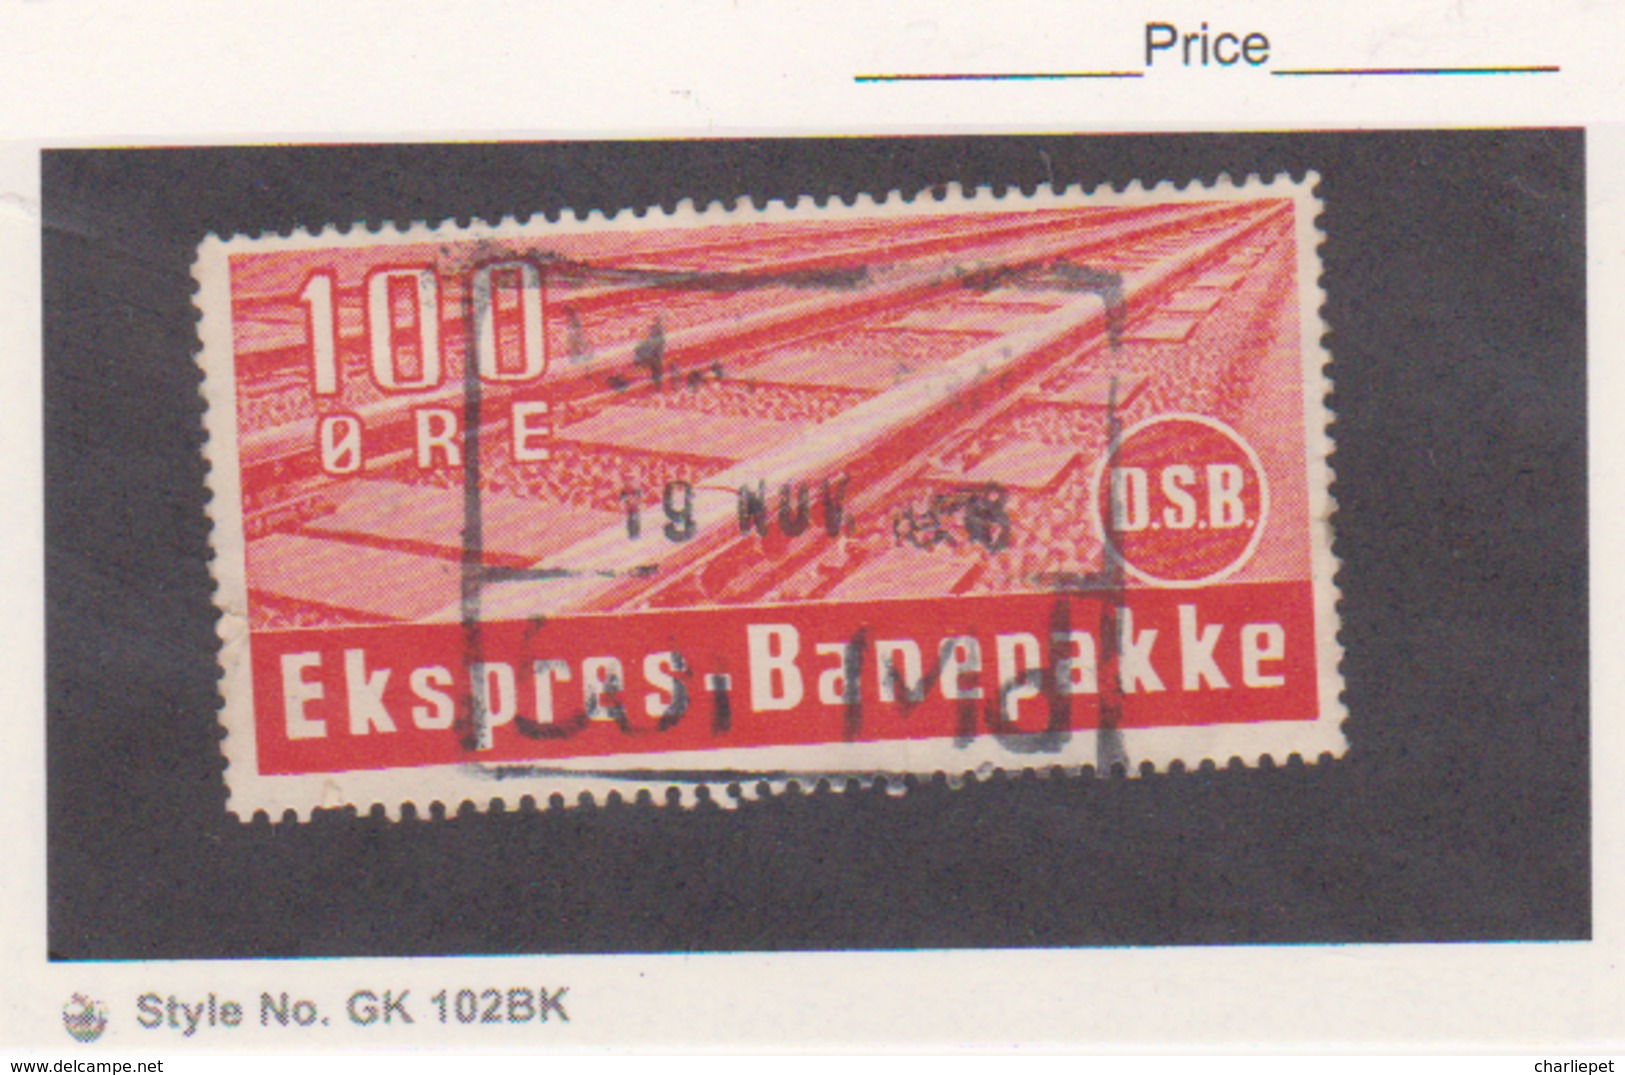 DANMARK DENMARK - EKSPRES BANEPAKKE - RAILWAY RAILROAD TRAIN Tax Stamp - Revenue Stamps